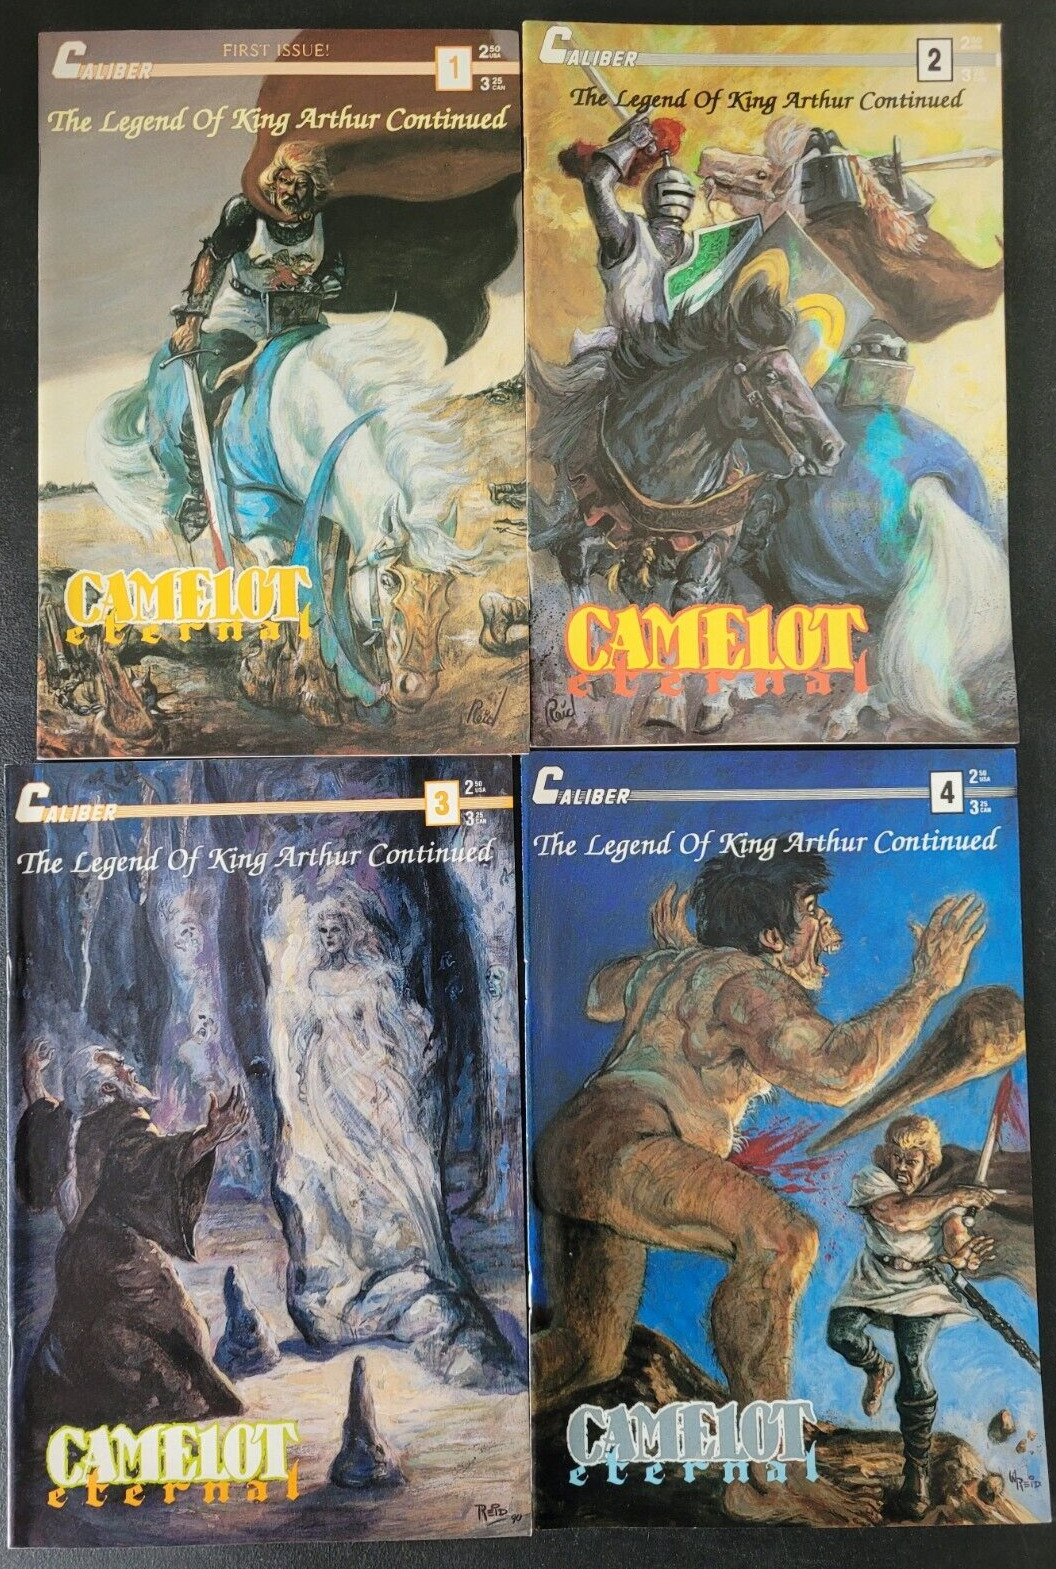 CAMELOT ETERNAL The Legend of King Arthur Continued #1-8 (1990) CALIBER FULL SET